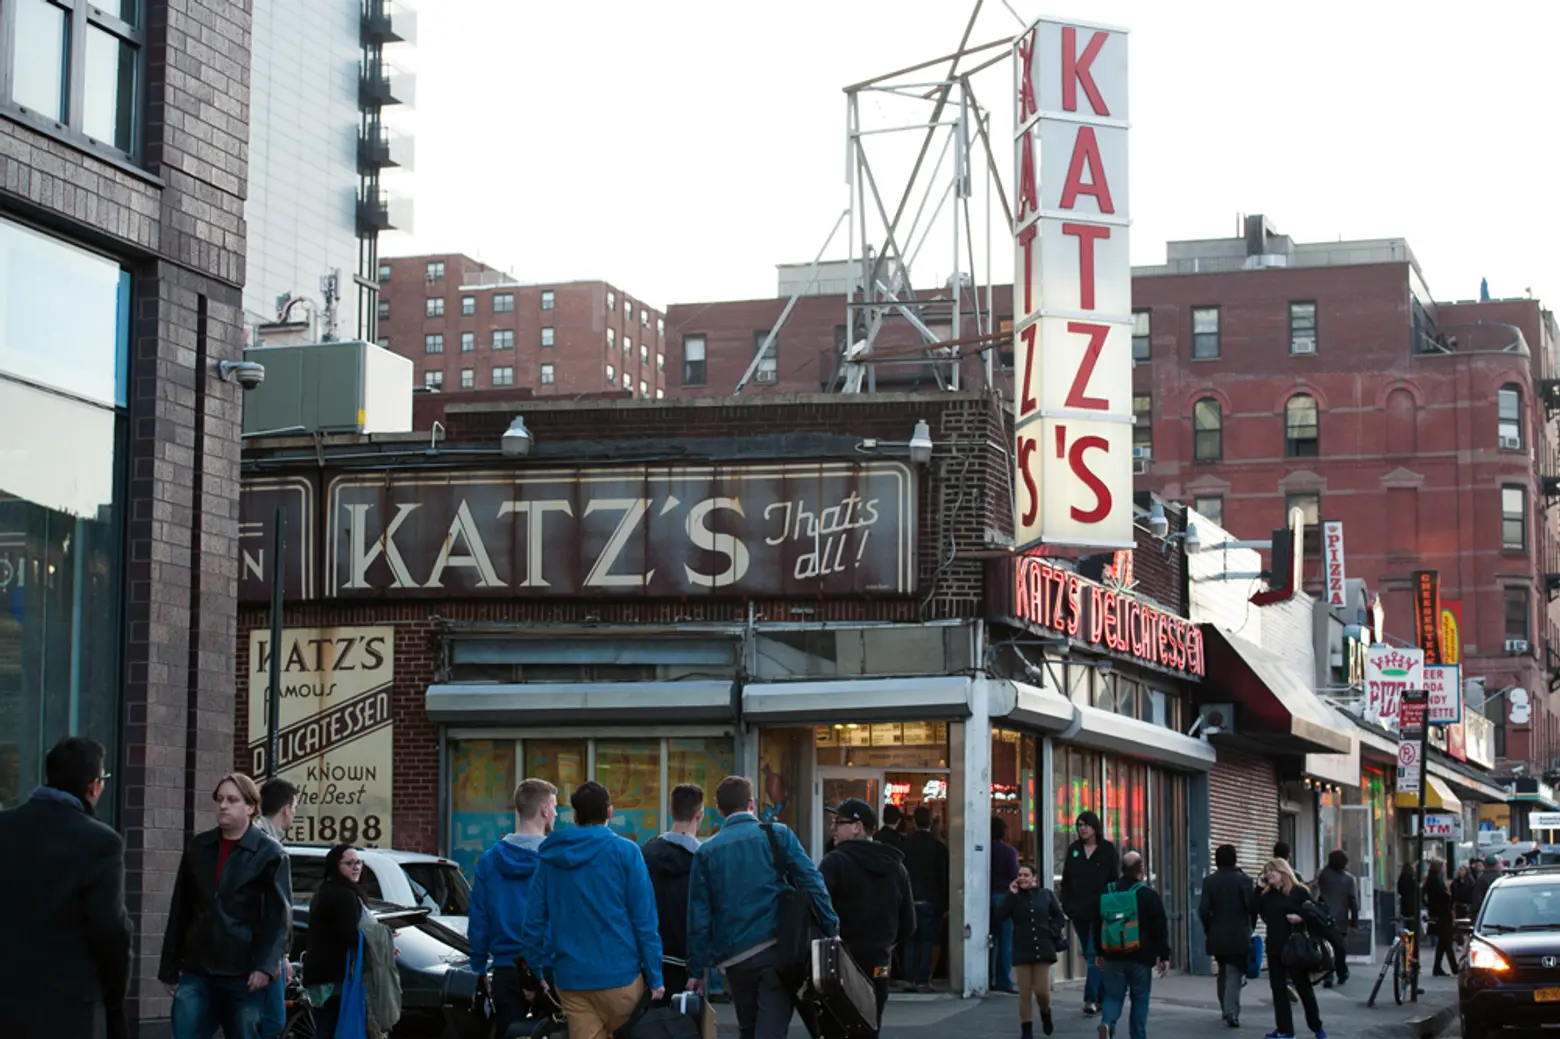 Katz's Delicatessen, Katz's Delicatessen lower east side